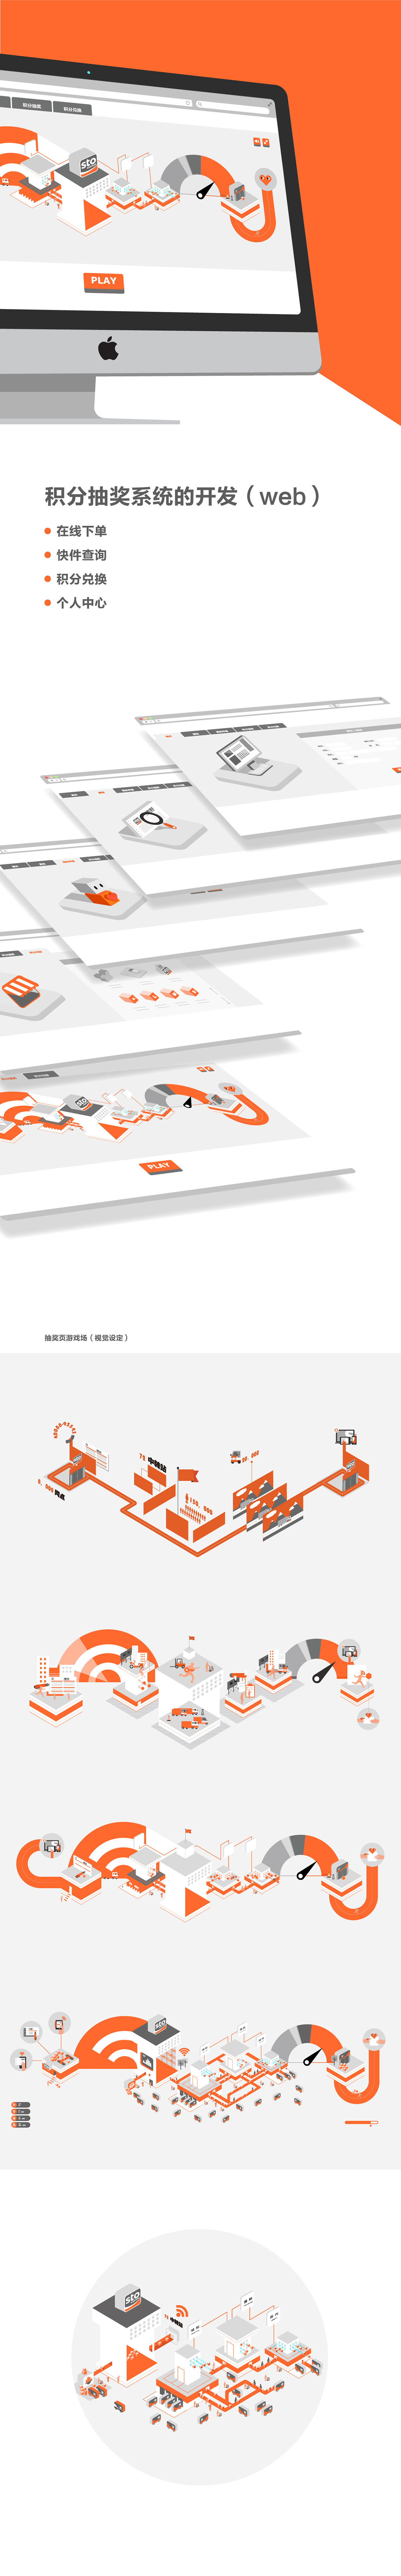 china e-commerce UI ux visual system brand flat app Web design inspiration concept art creative